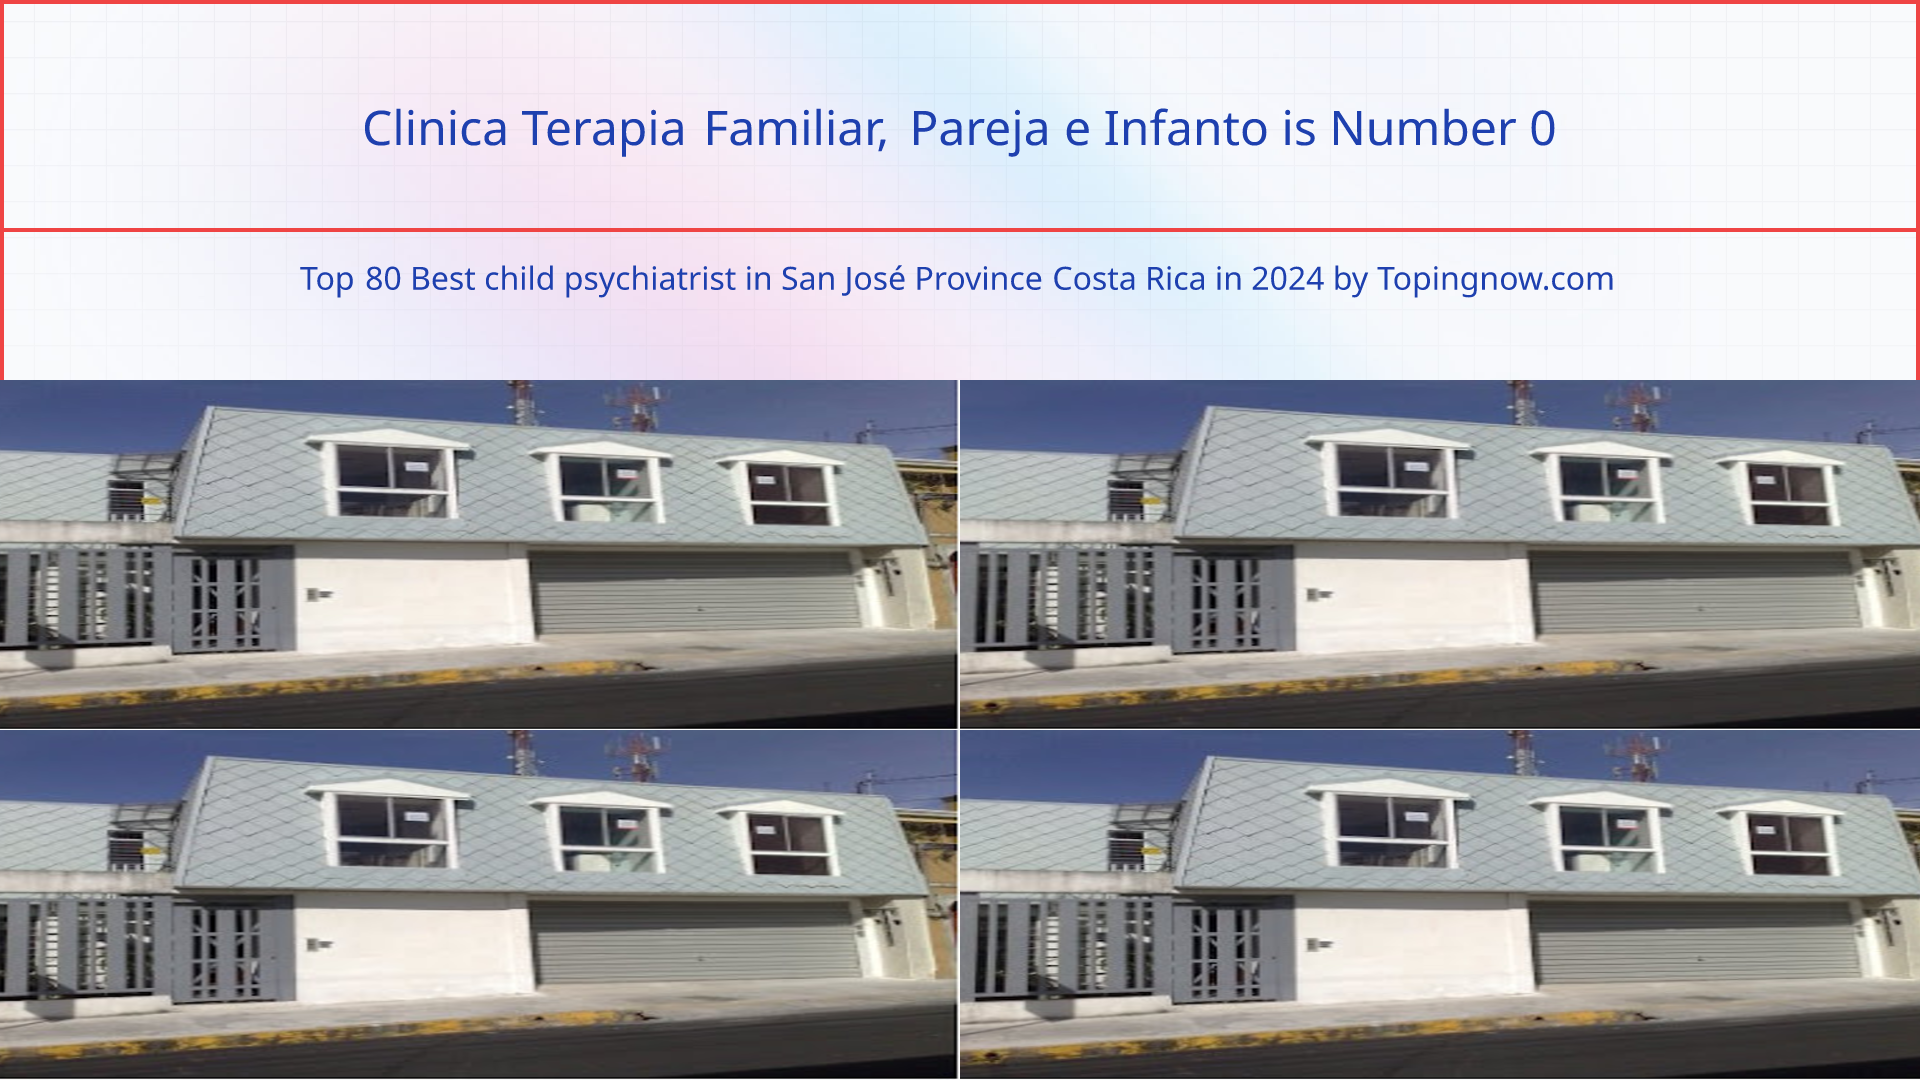 Clinica Terapia Familiar, Pareja e Infanto: Top 80 Best child psychiatrist in San José Province Costa Rica in 2024